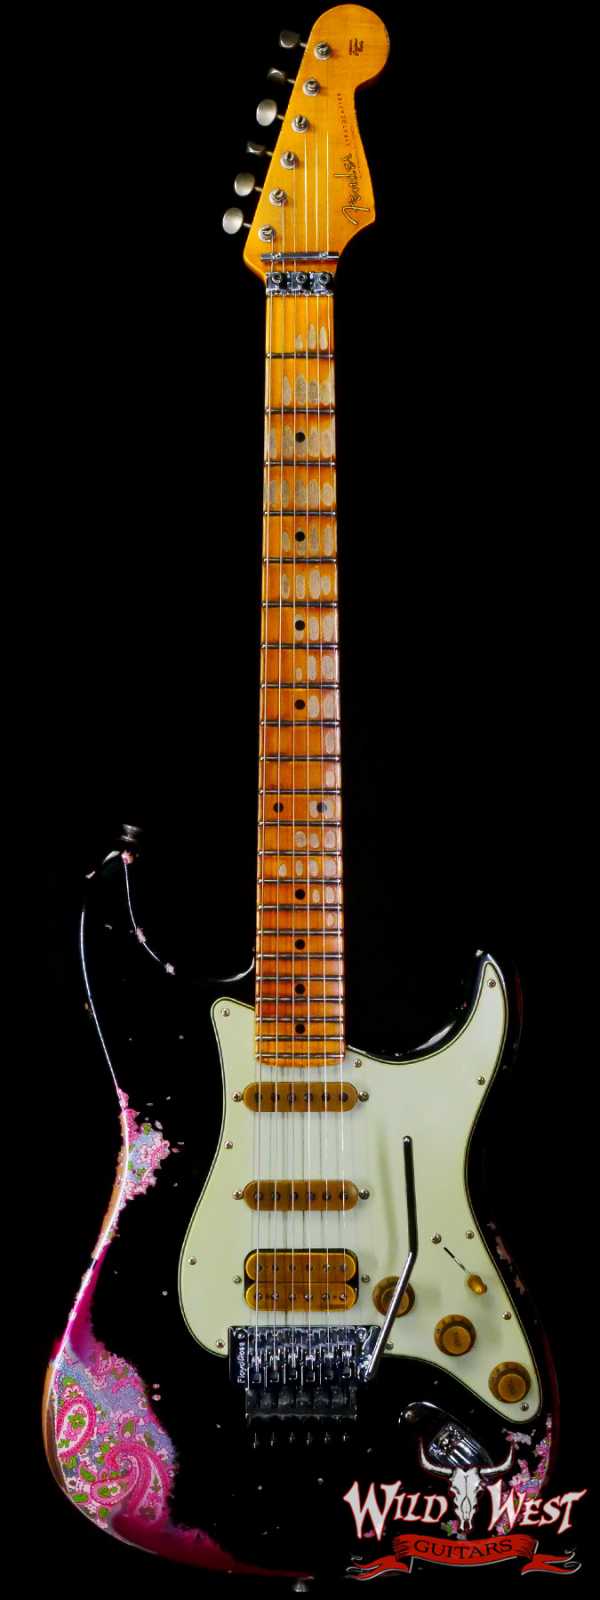 Fender Custom Shop Wild West Black Lightning Stratocaster HSS Floyd Rose Maple Board 22 Frets Heavy Relic Pink Paisley